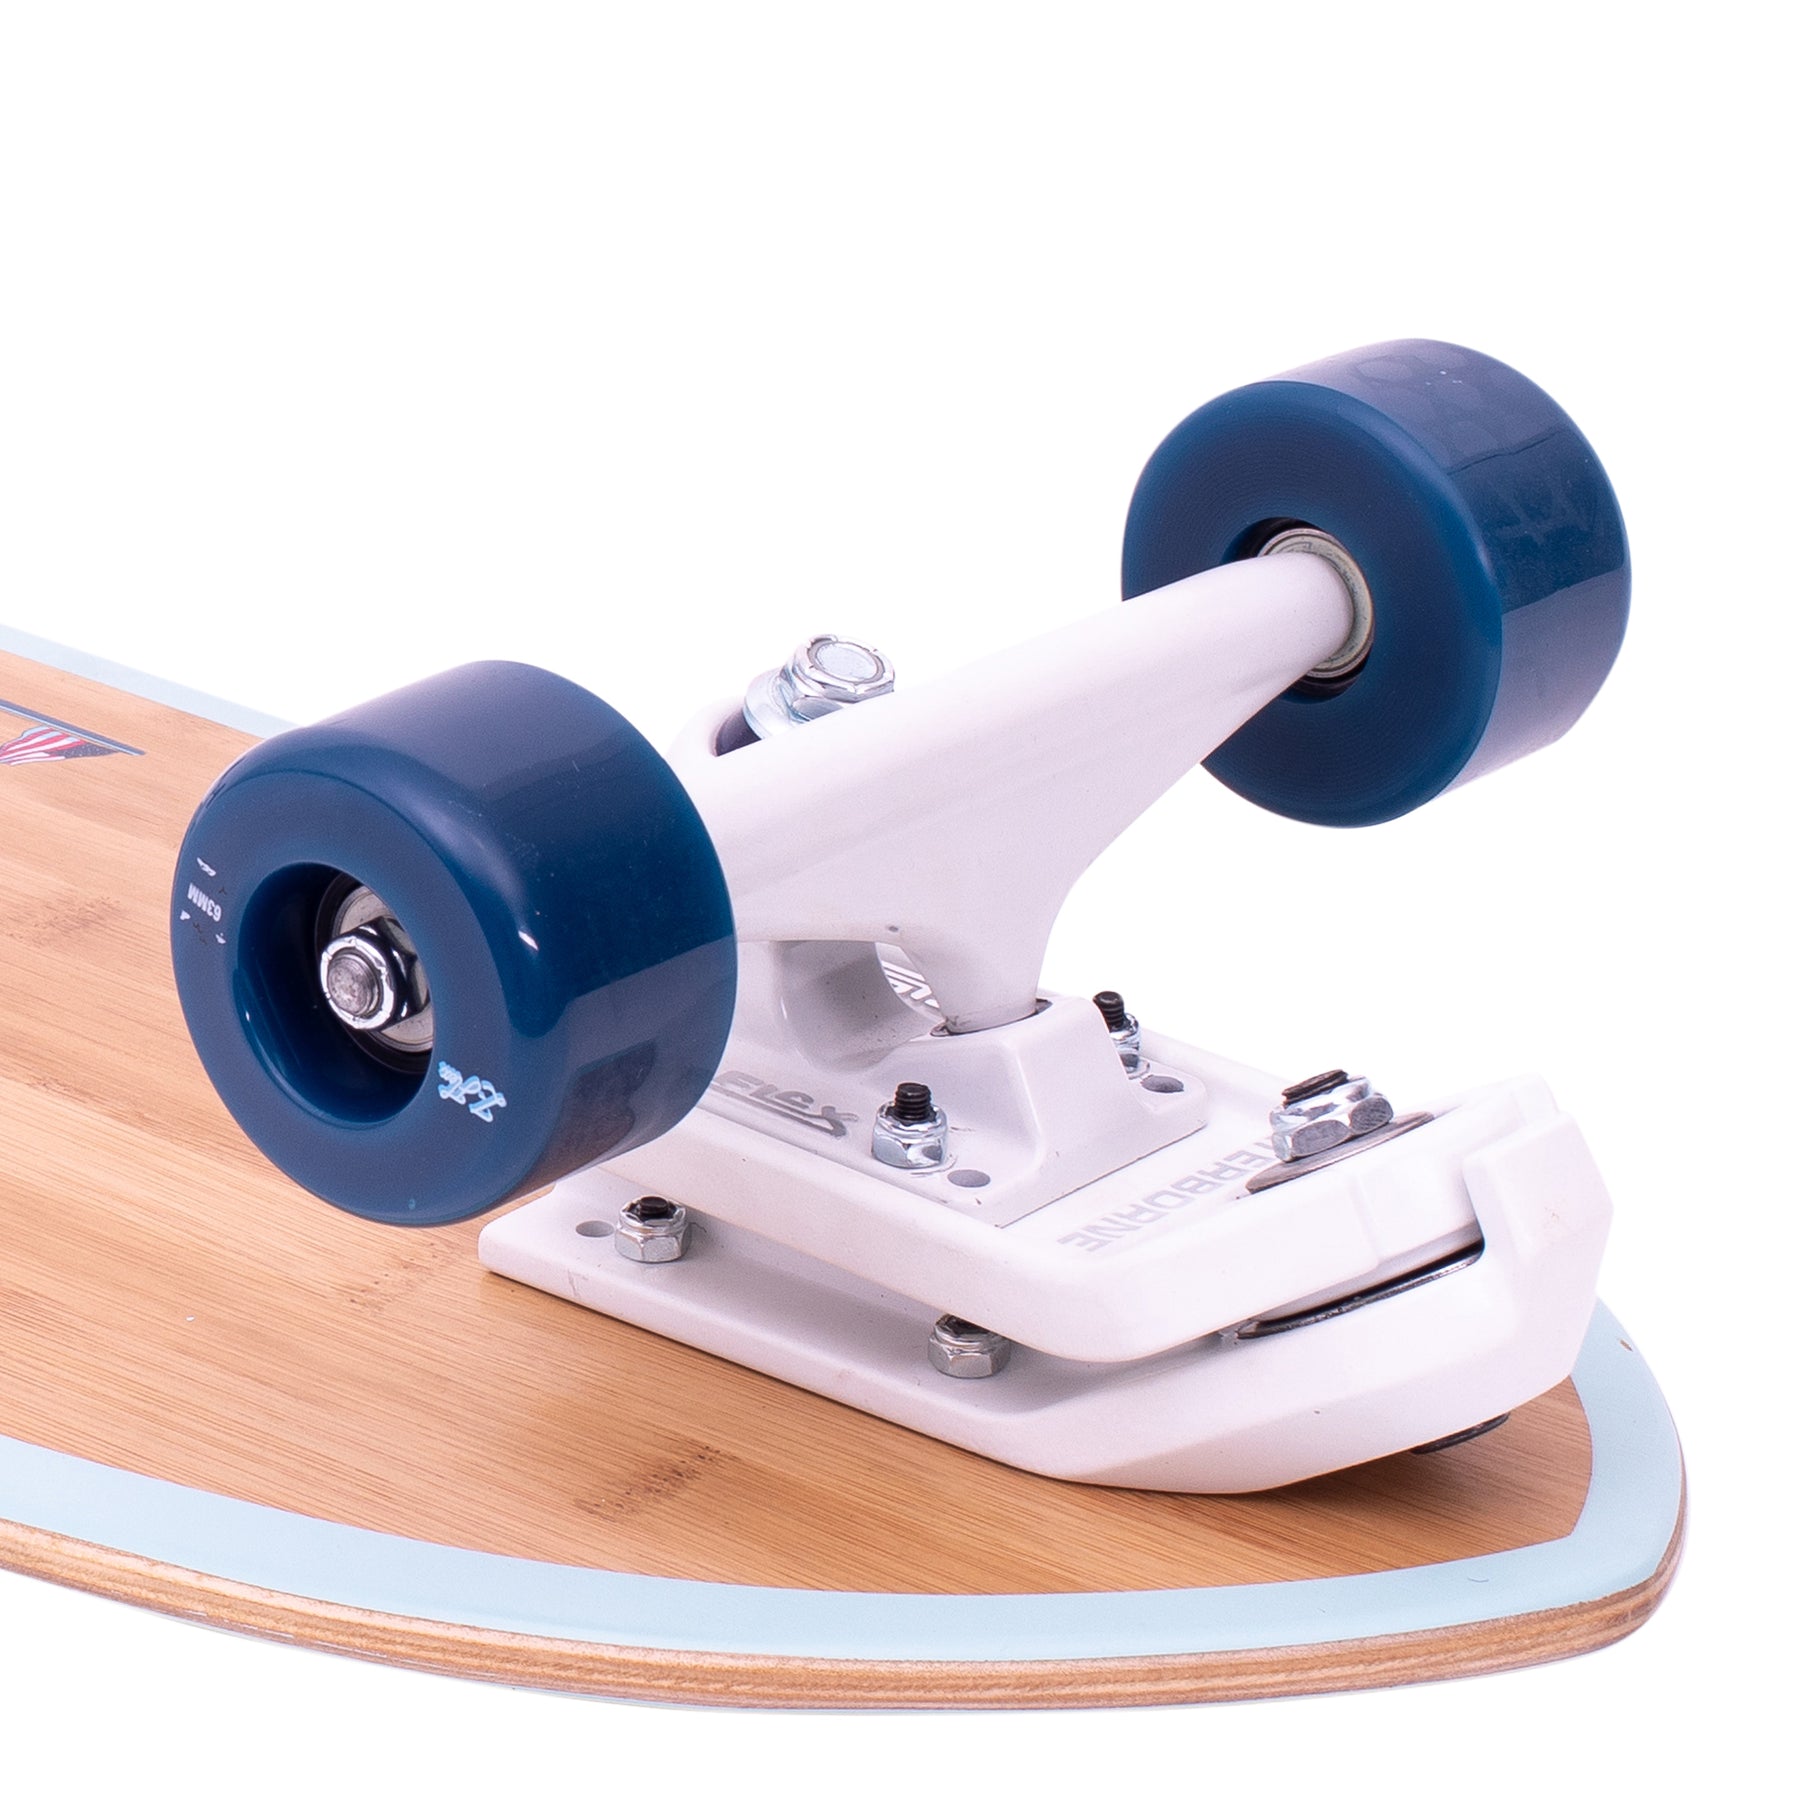 3.0 Land Surf Skateboard Deck Carver Carbonized Bamboo Fiberglass